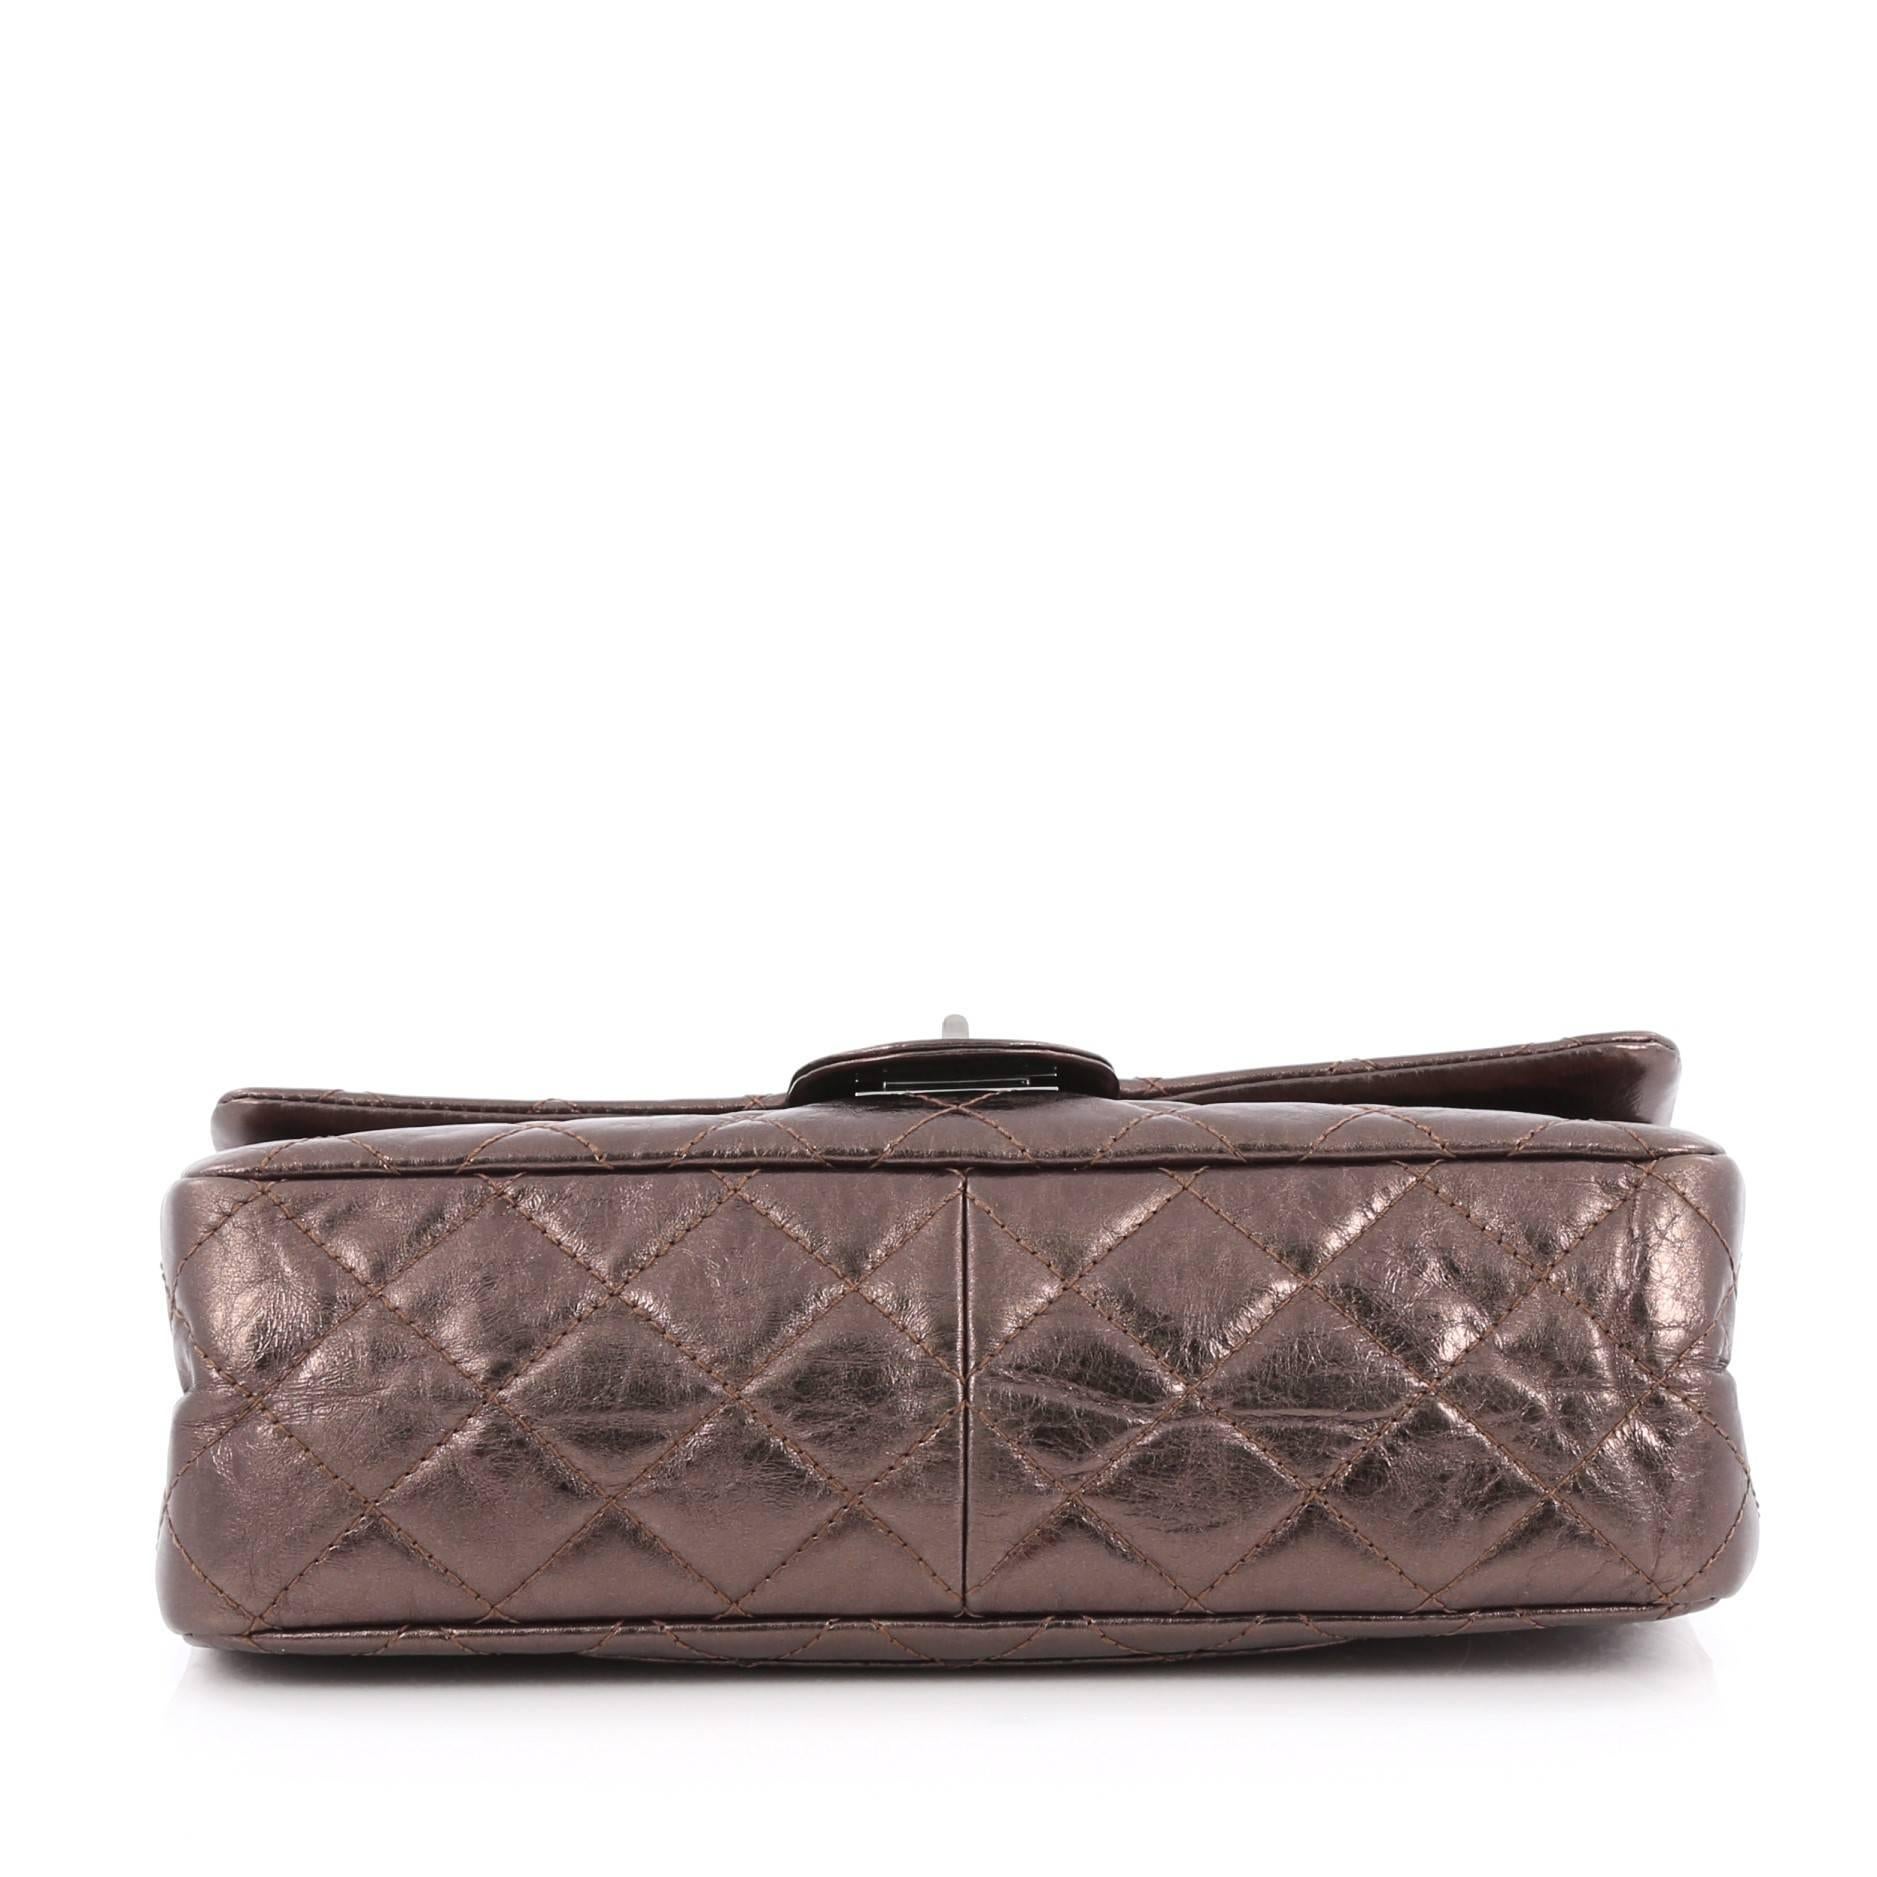 Women's or Men's Chanel Reissue 2.55 Handbag Metallic Quilted Aged Calfskin 227